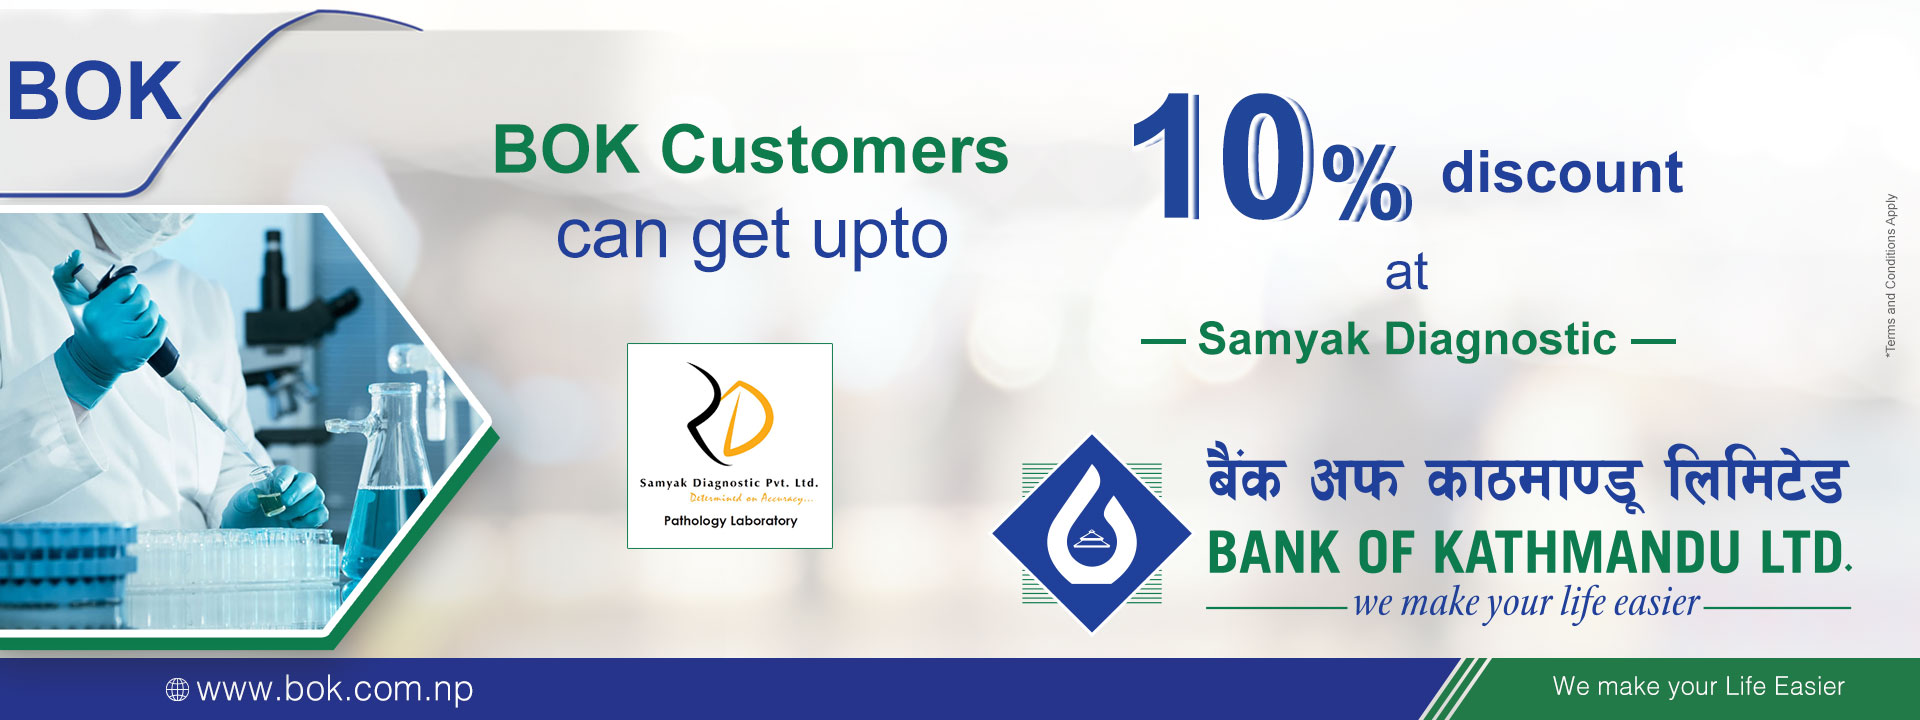 Special discount on Samyak Diagnostic for Bank of Kathmandu customers